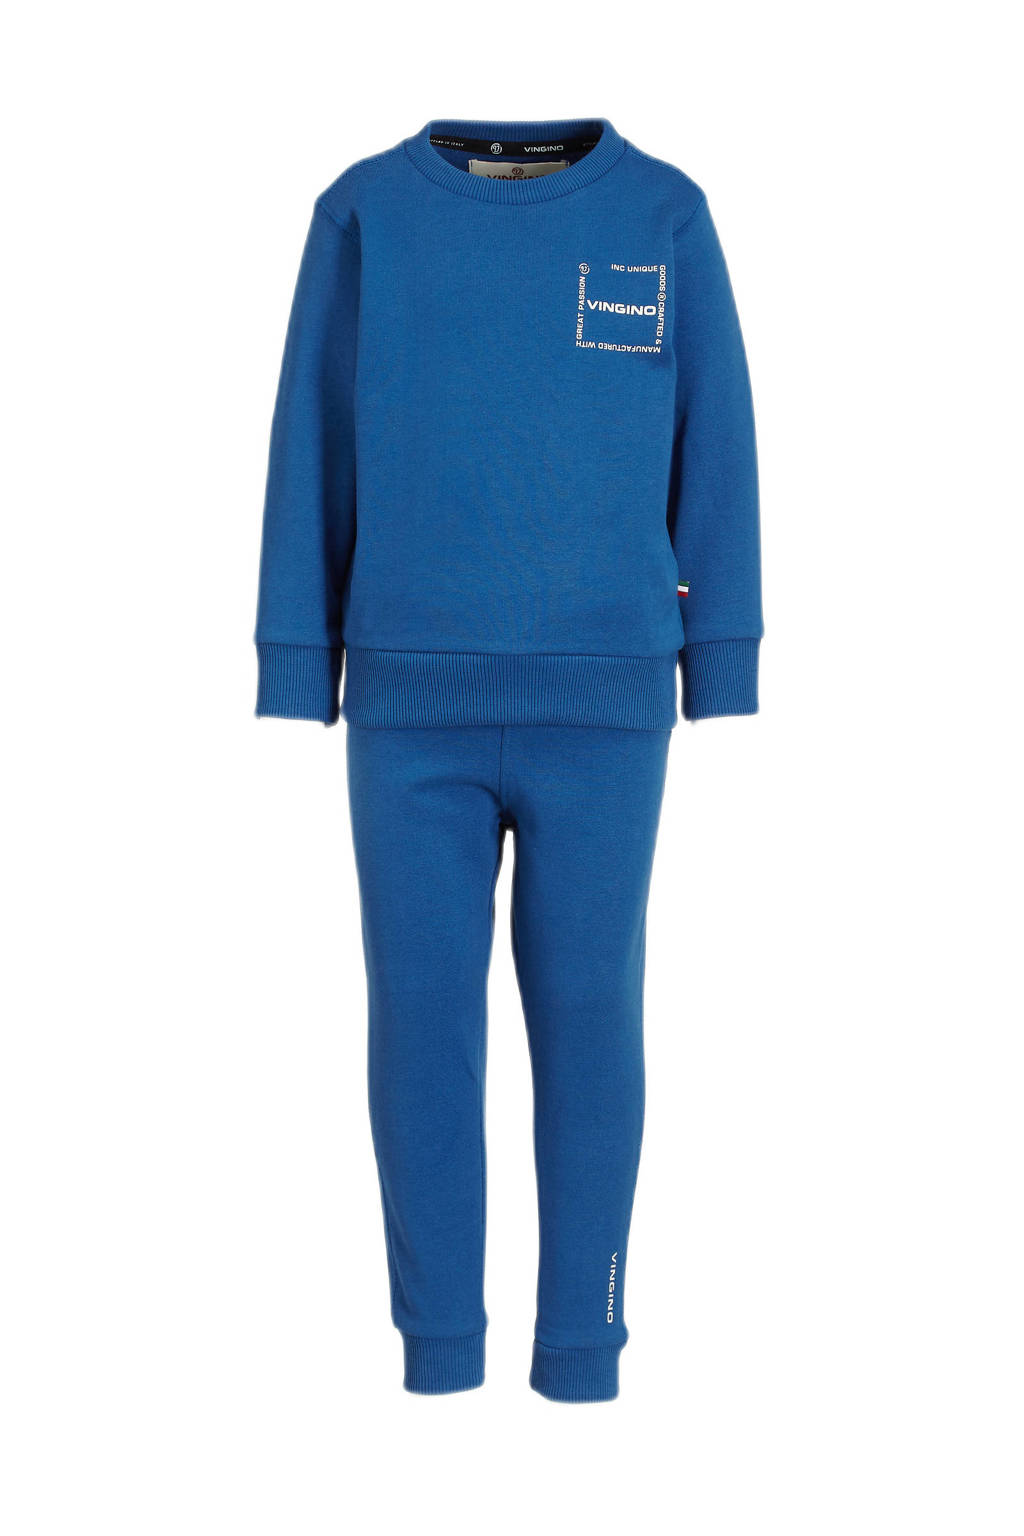 Vingino sweater + joggingbroek Ninko blauw